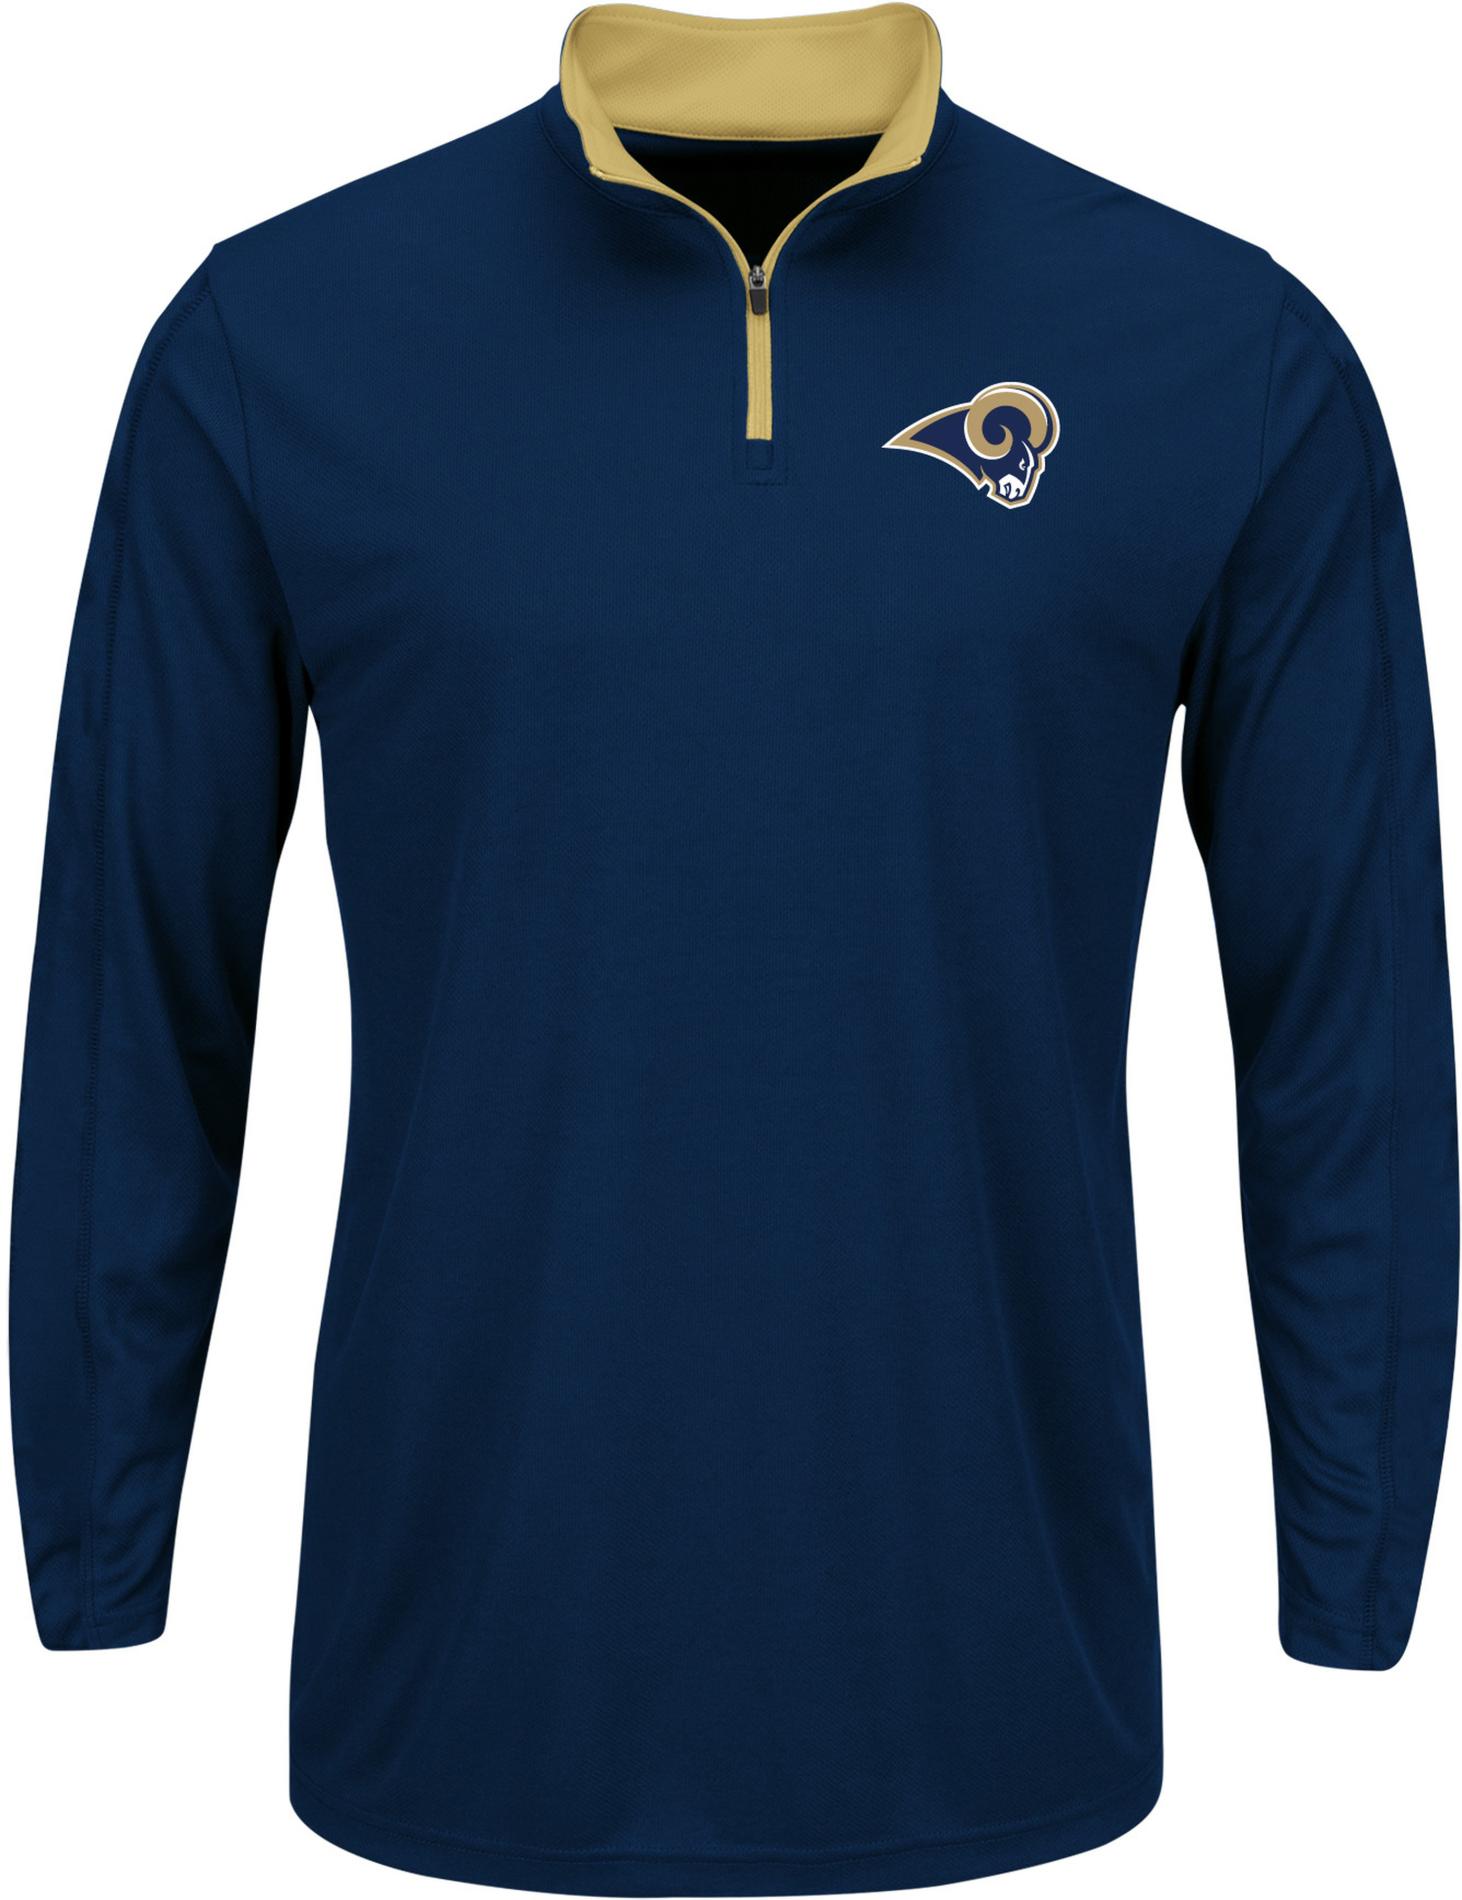 NFL Men's Quarter-Zip Shirt - Los Angeles Rams